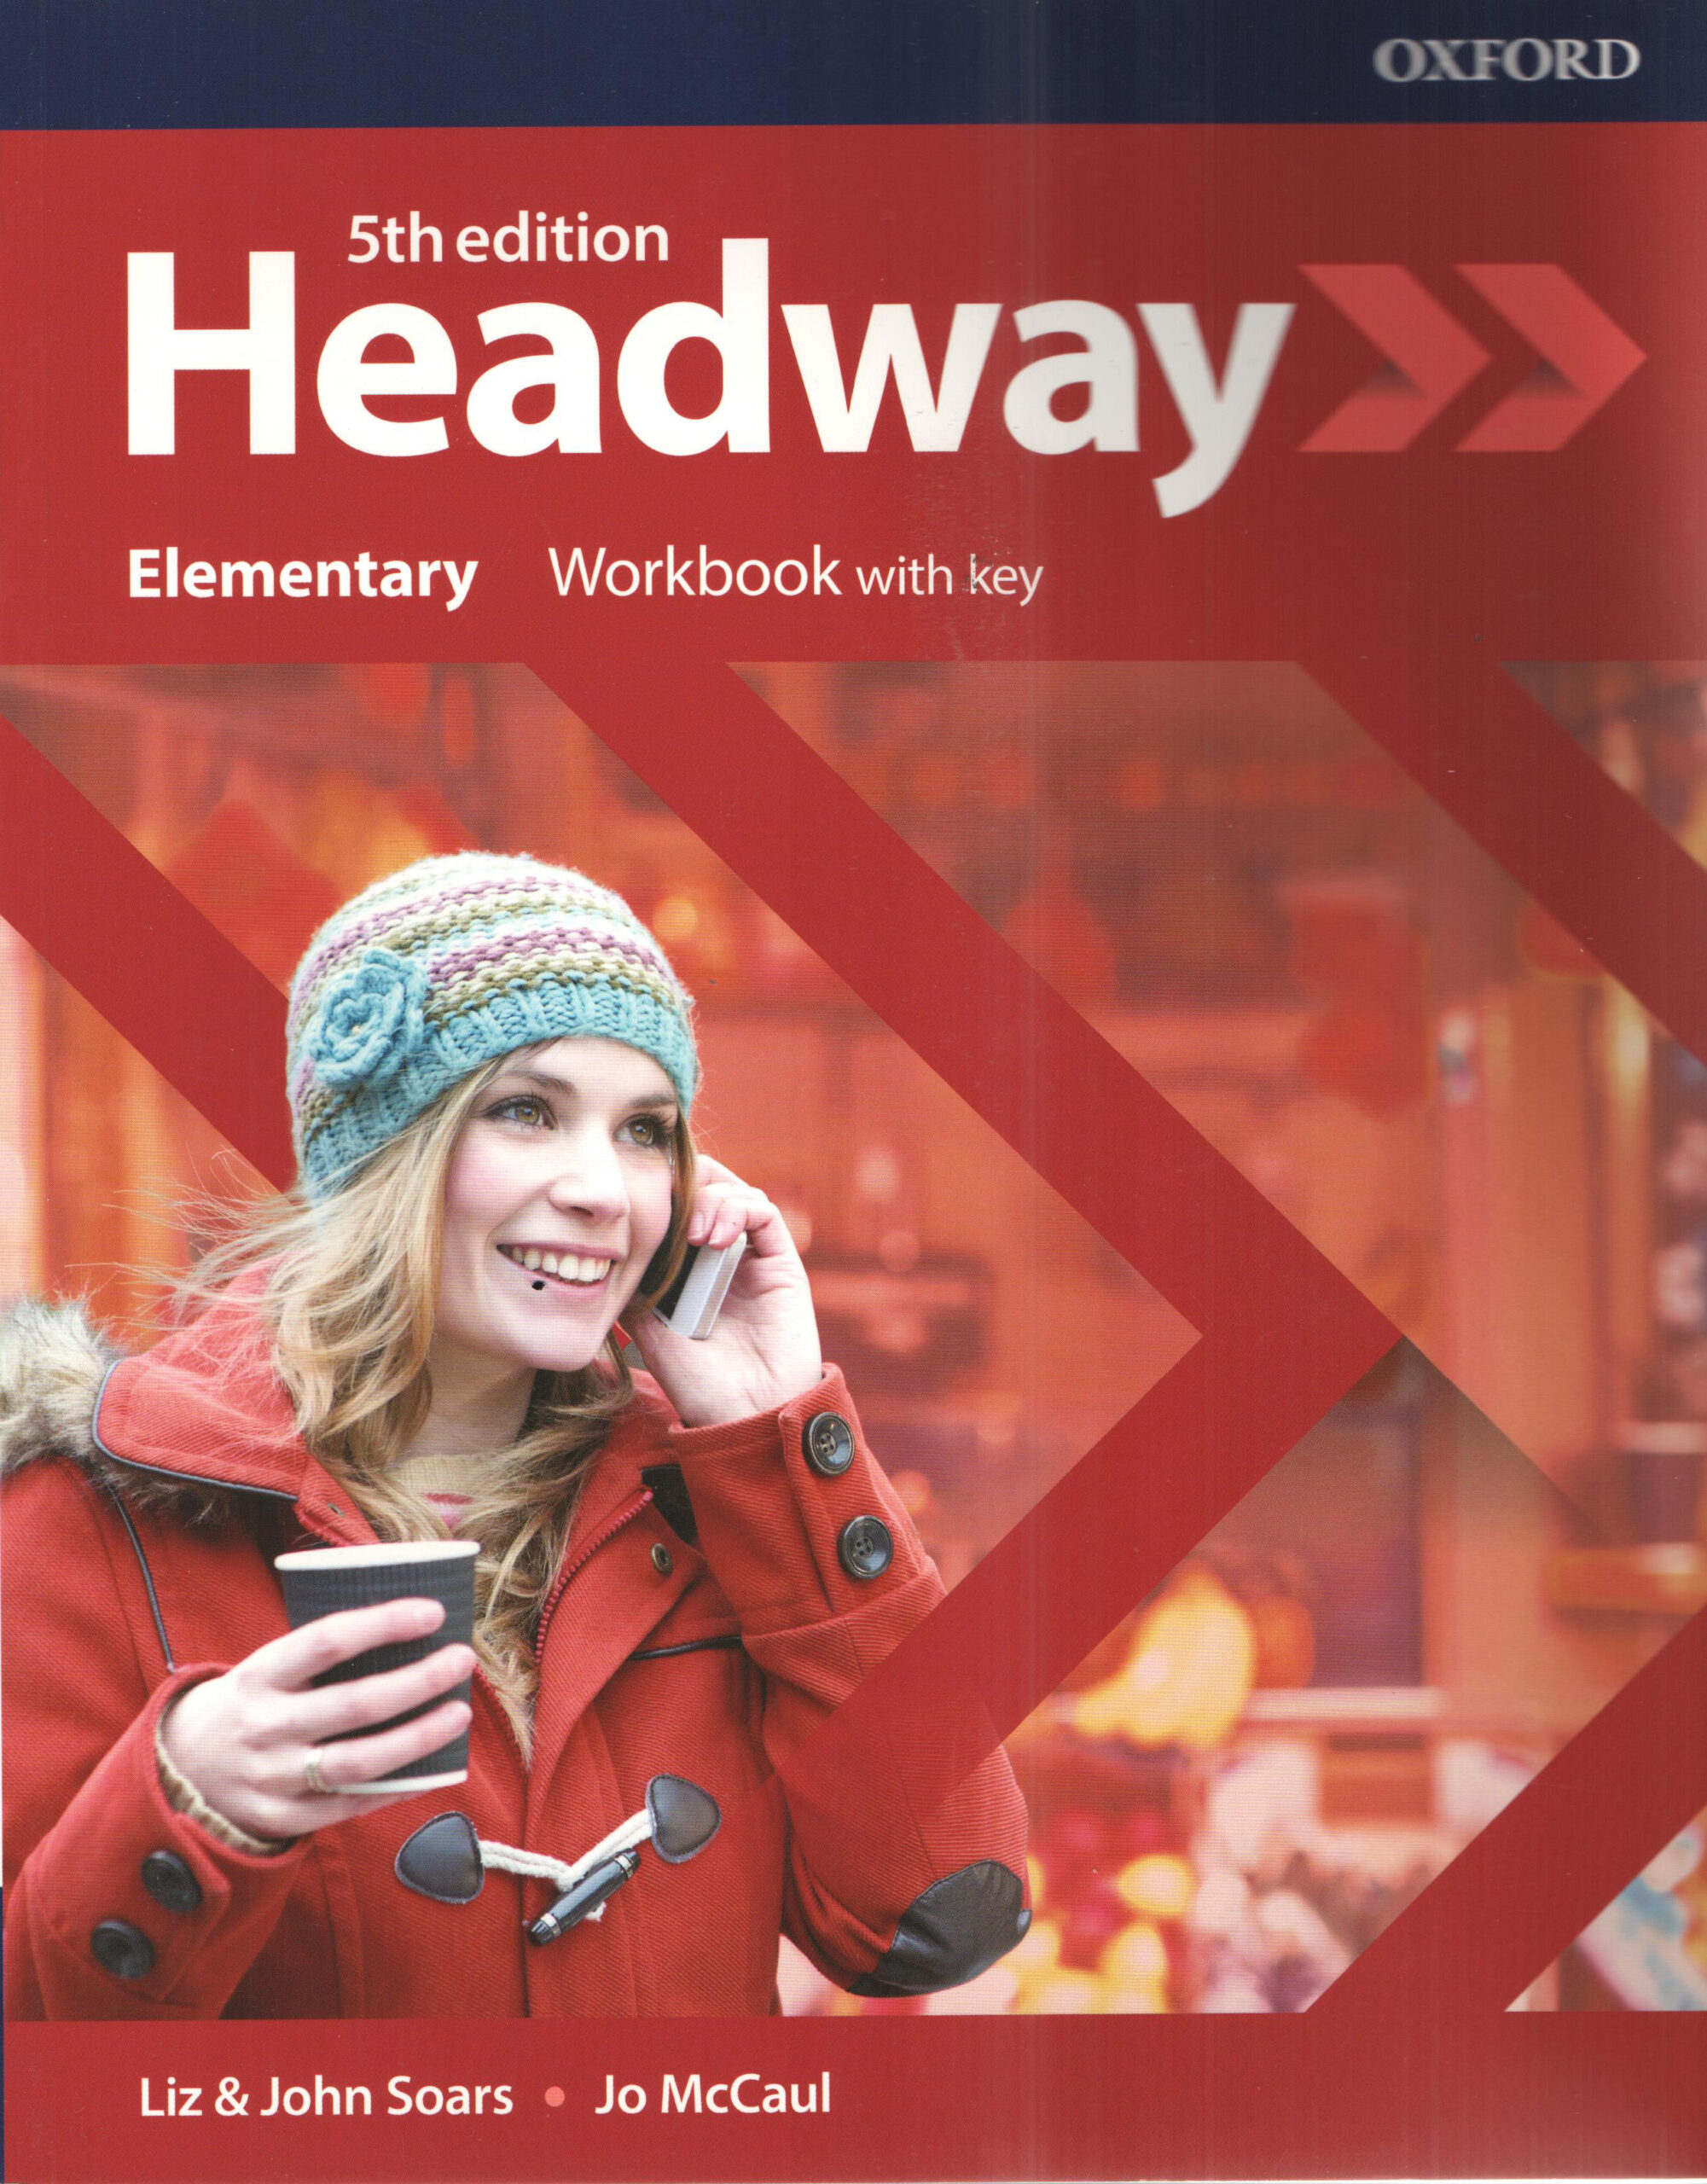 Elementary workbook key. New Headway Elementary 5th Edition. Headway Elementary Workbook. New Headway Workbook 5 Edition. Headway Elementary Workbook book.